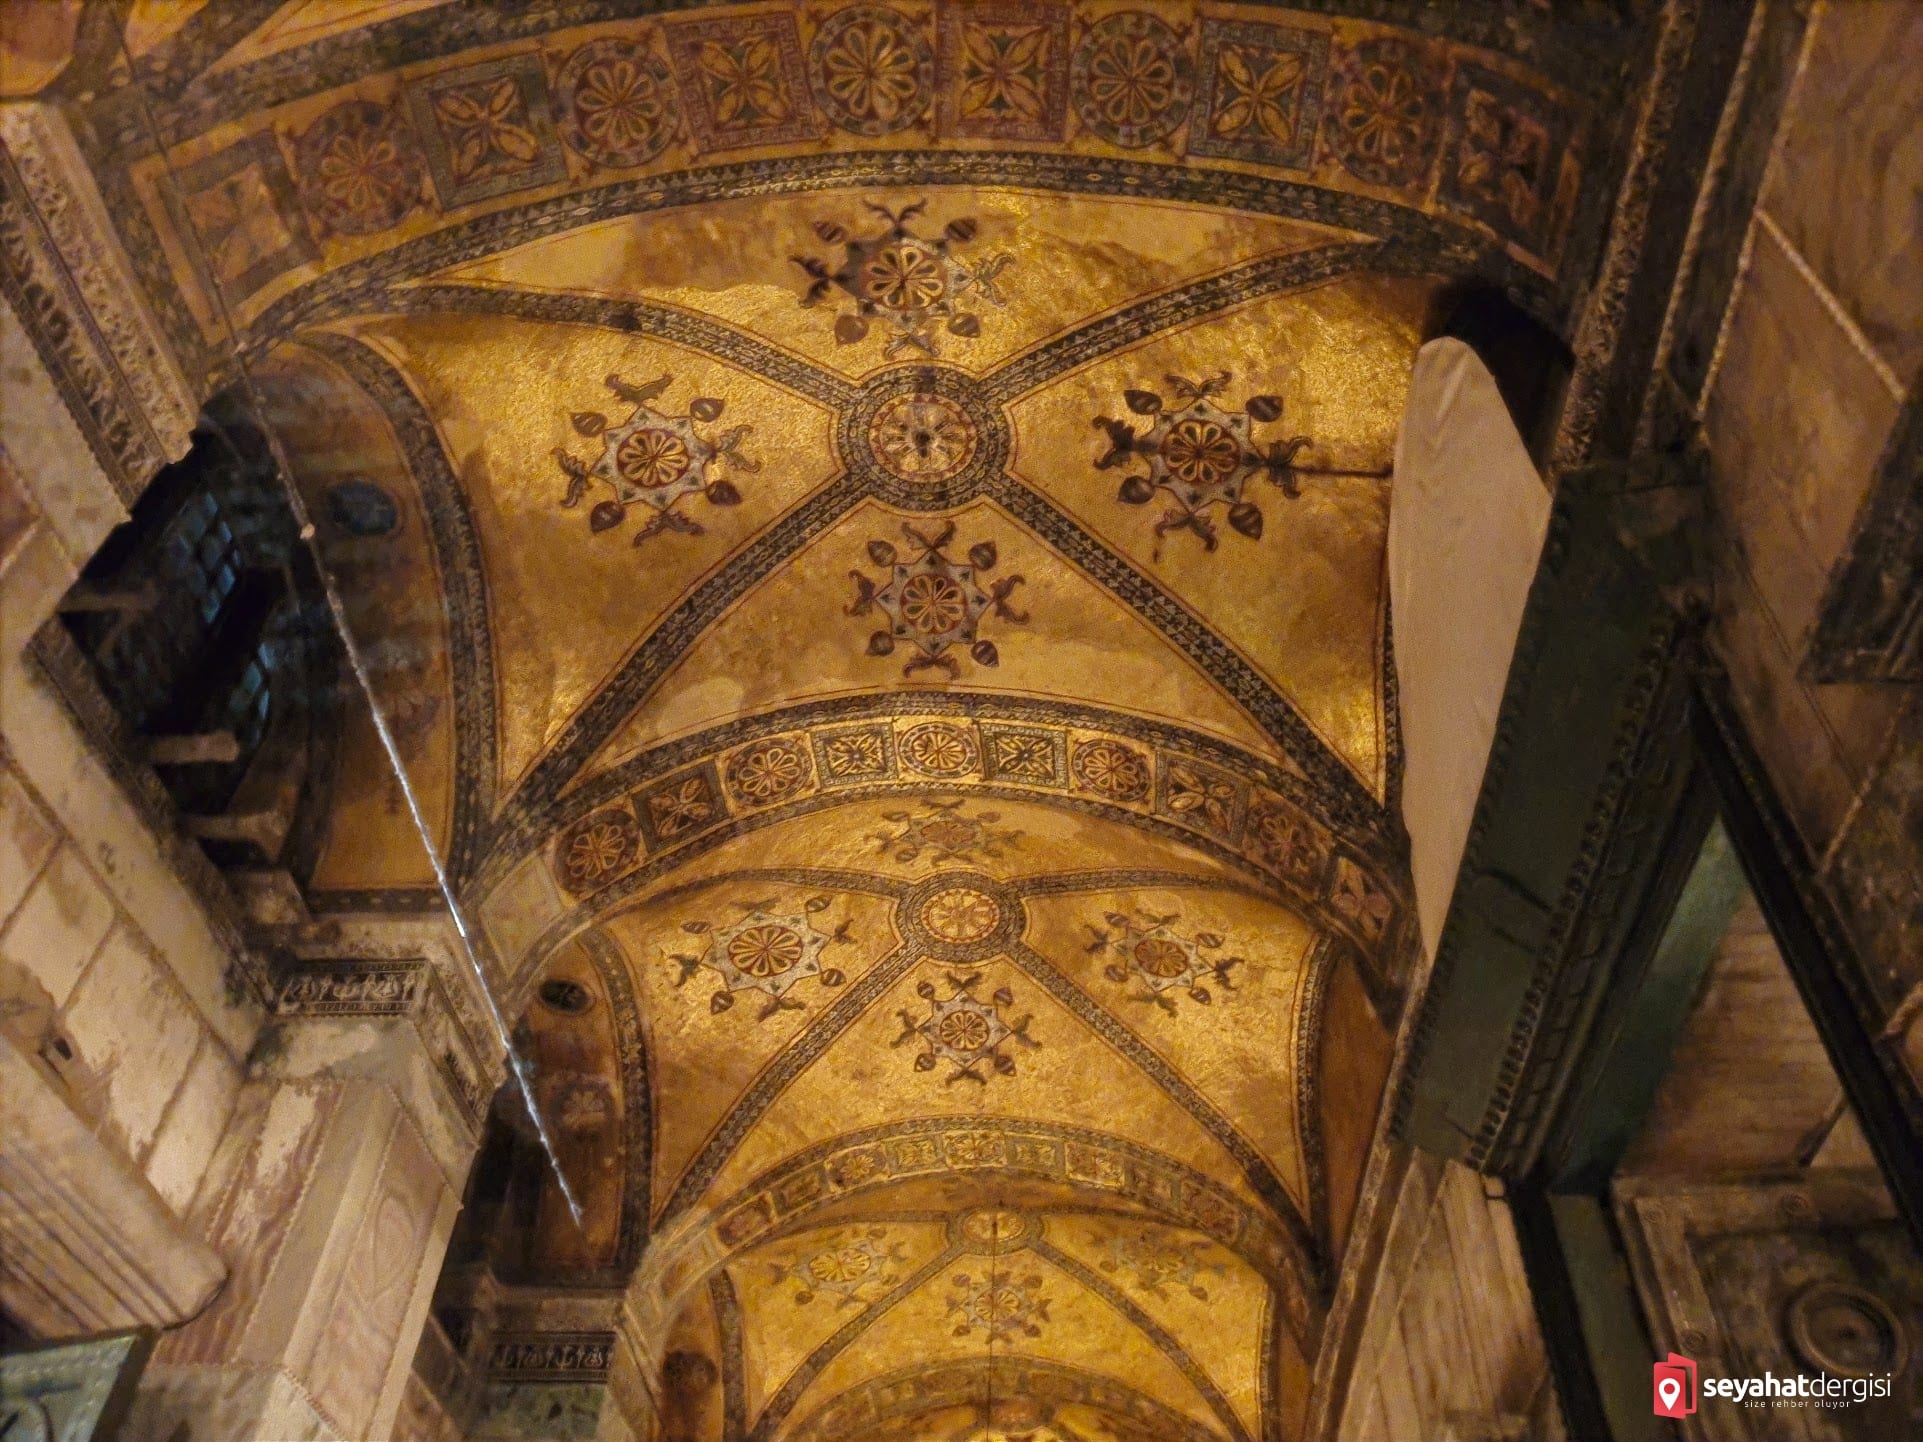 Ceiling Decorations in Hagia Sophia Entrance